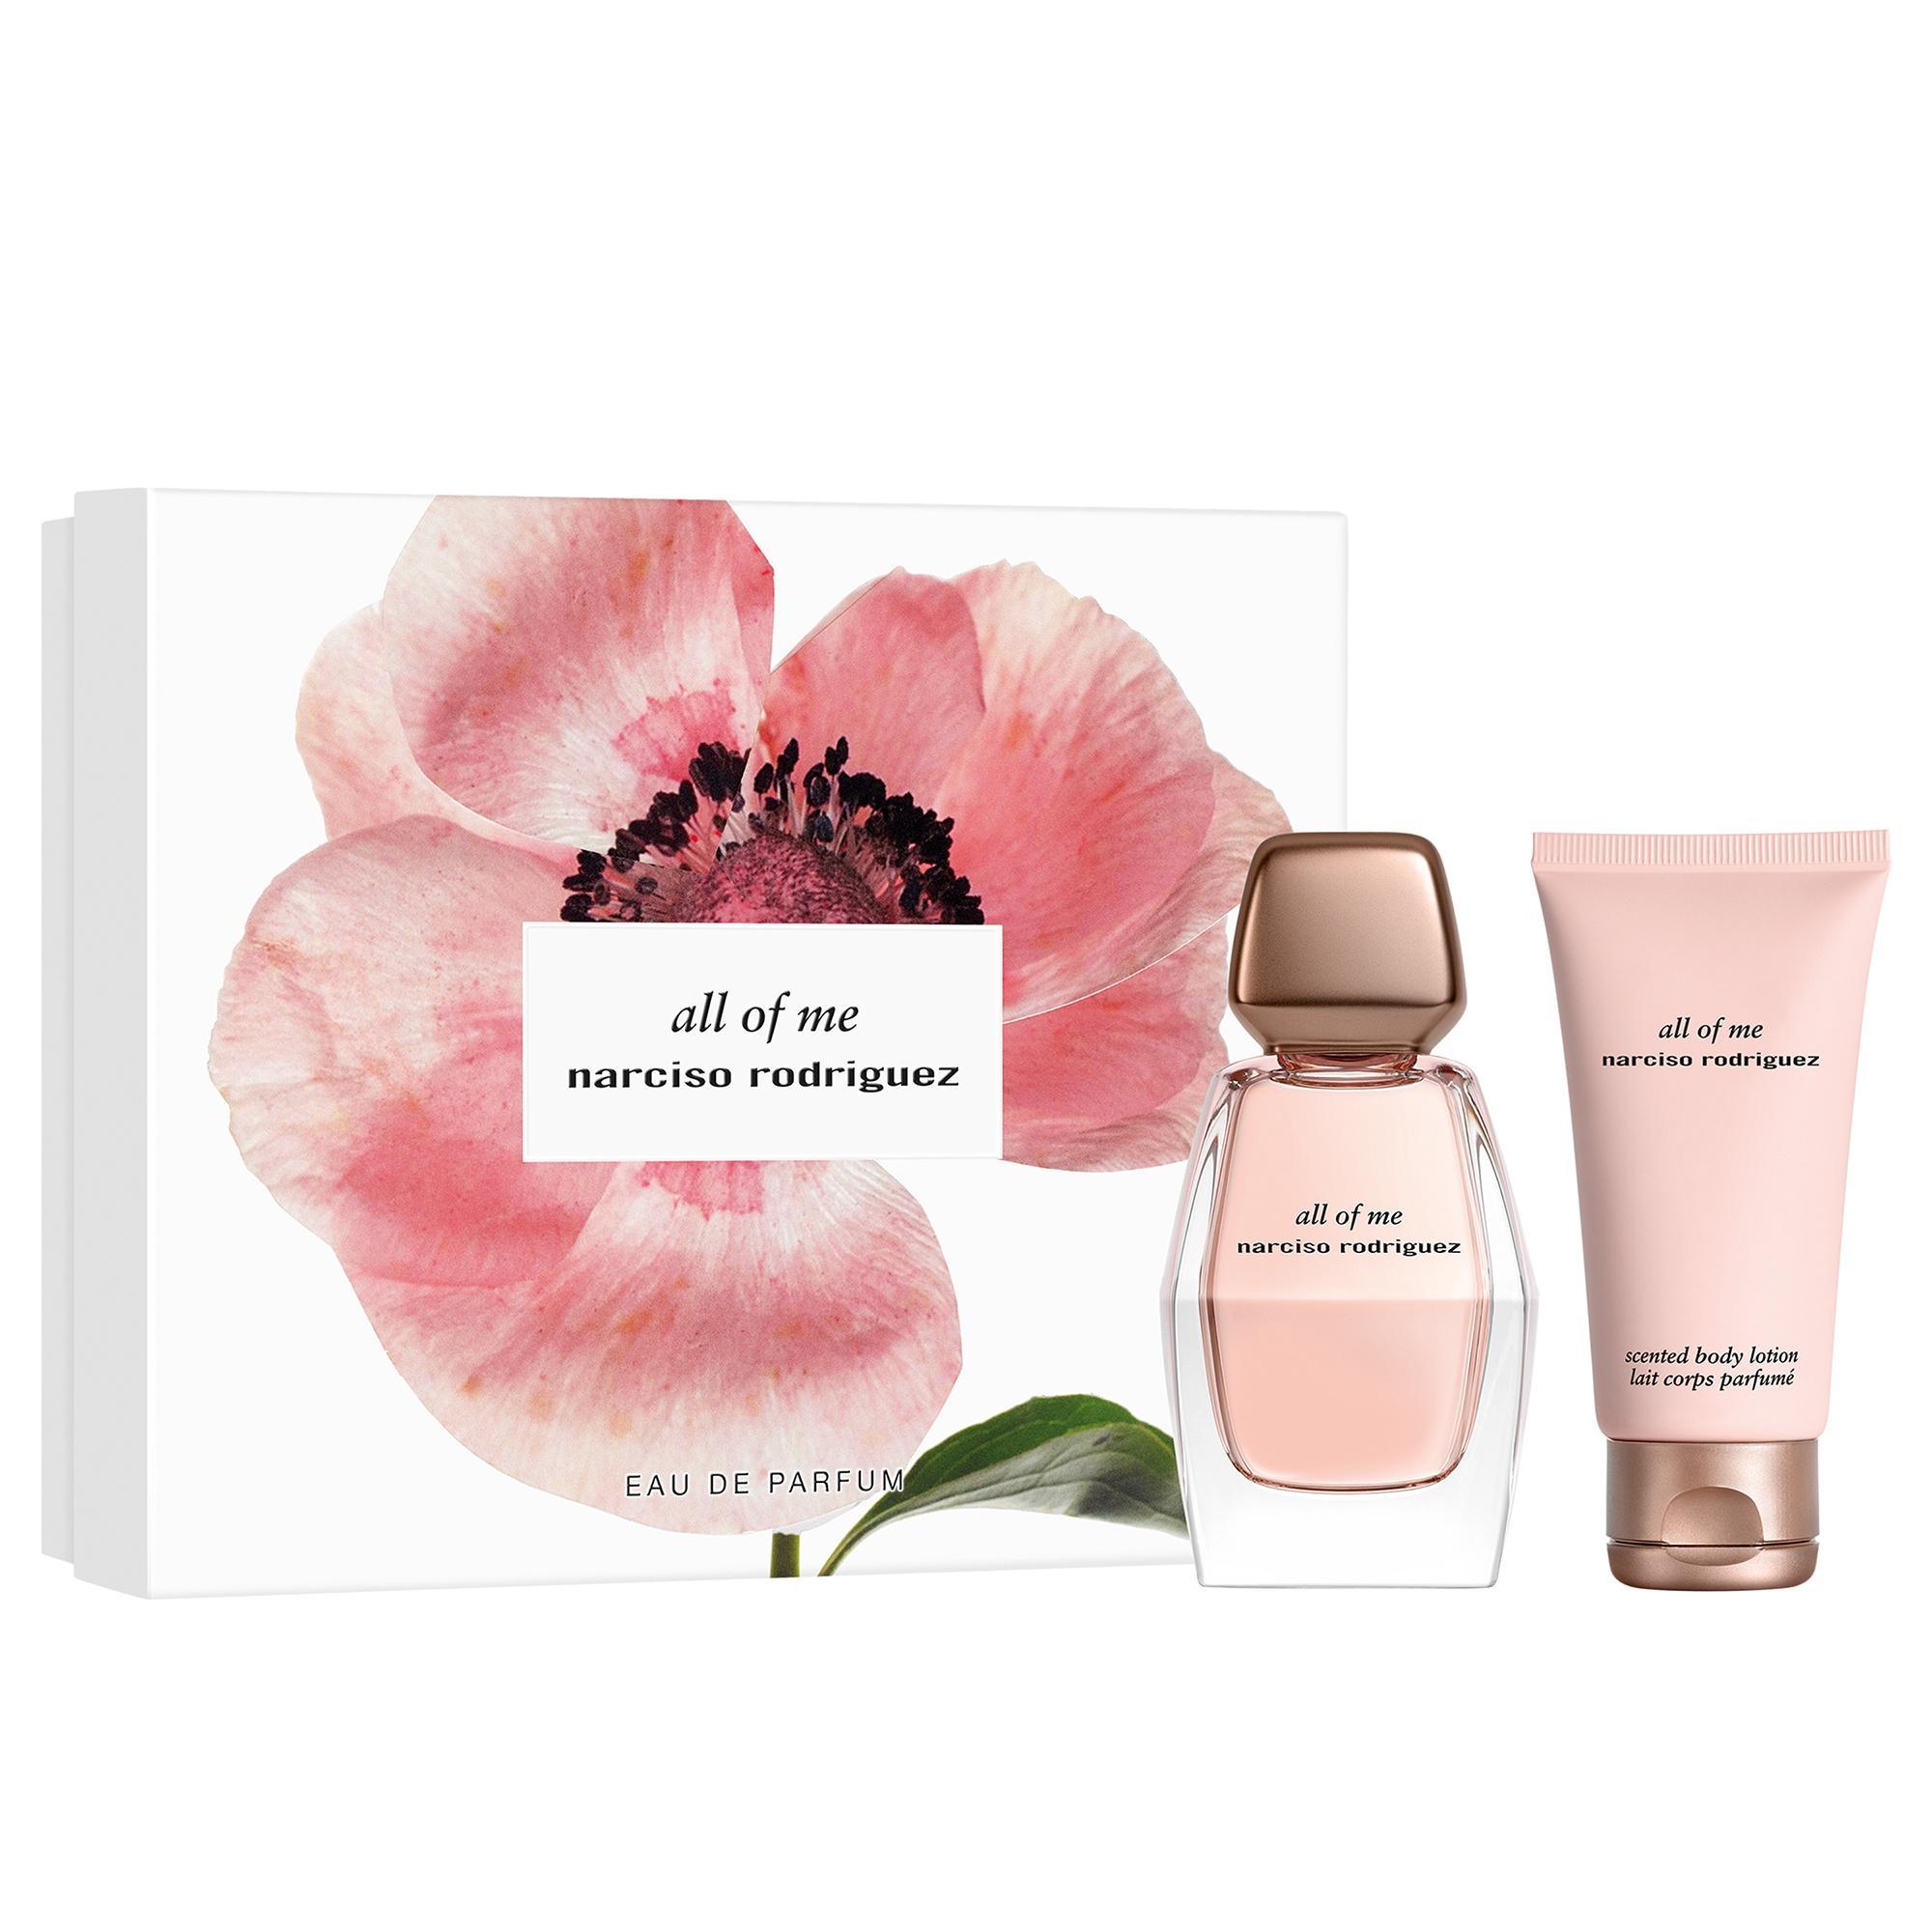  - All of me Eau de Parfum Spring Set